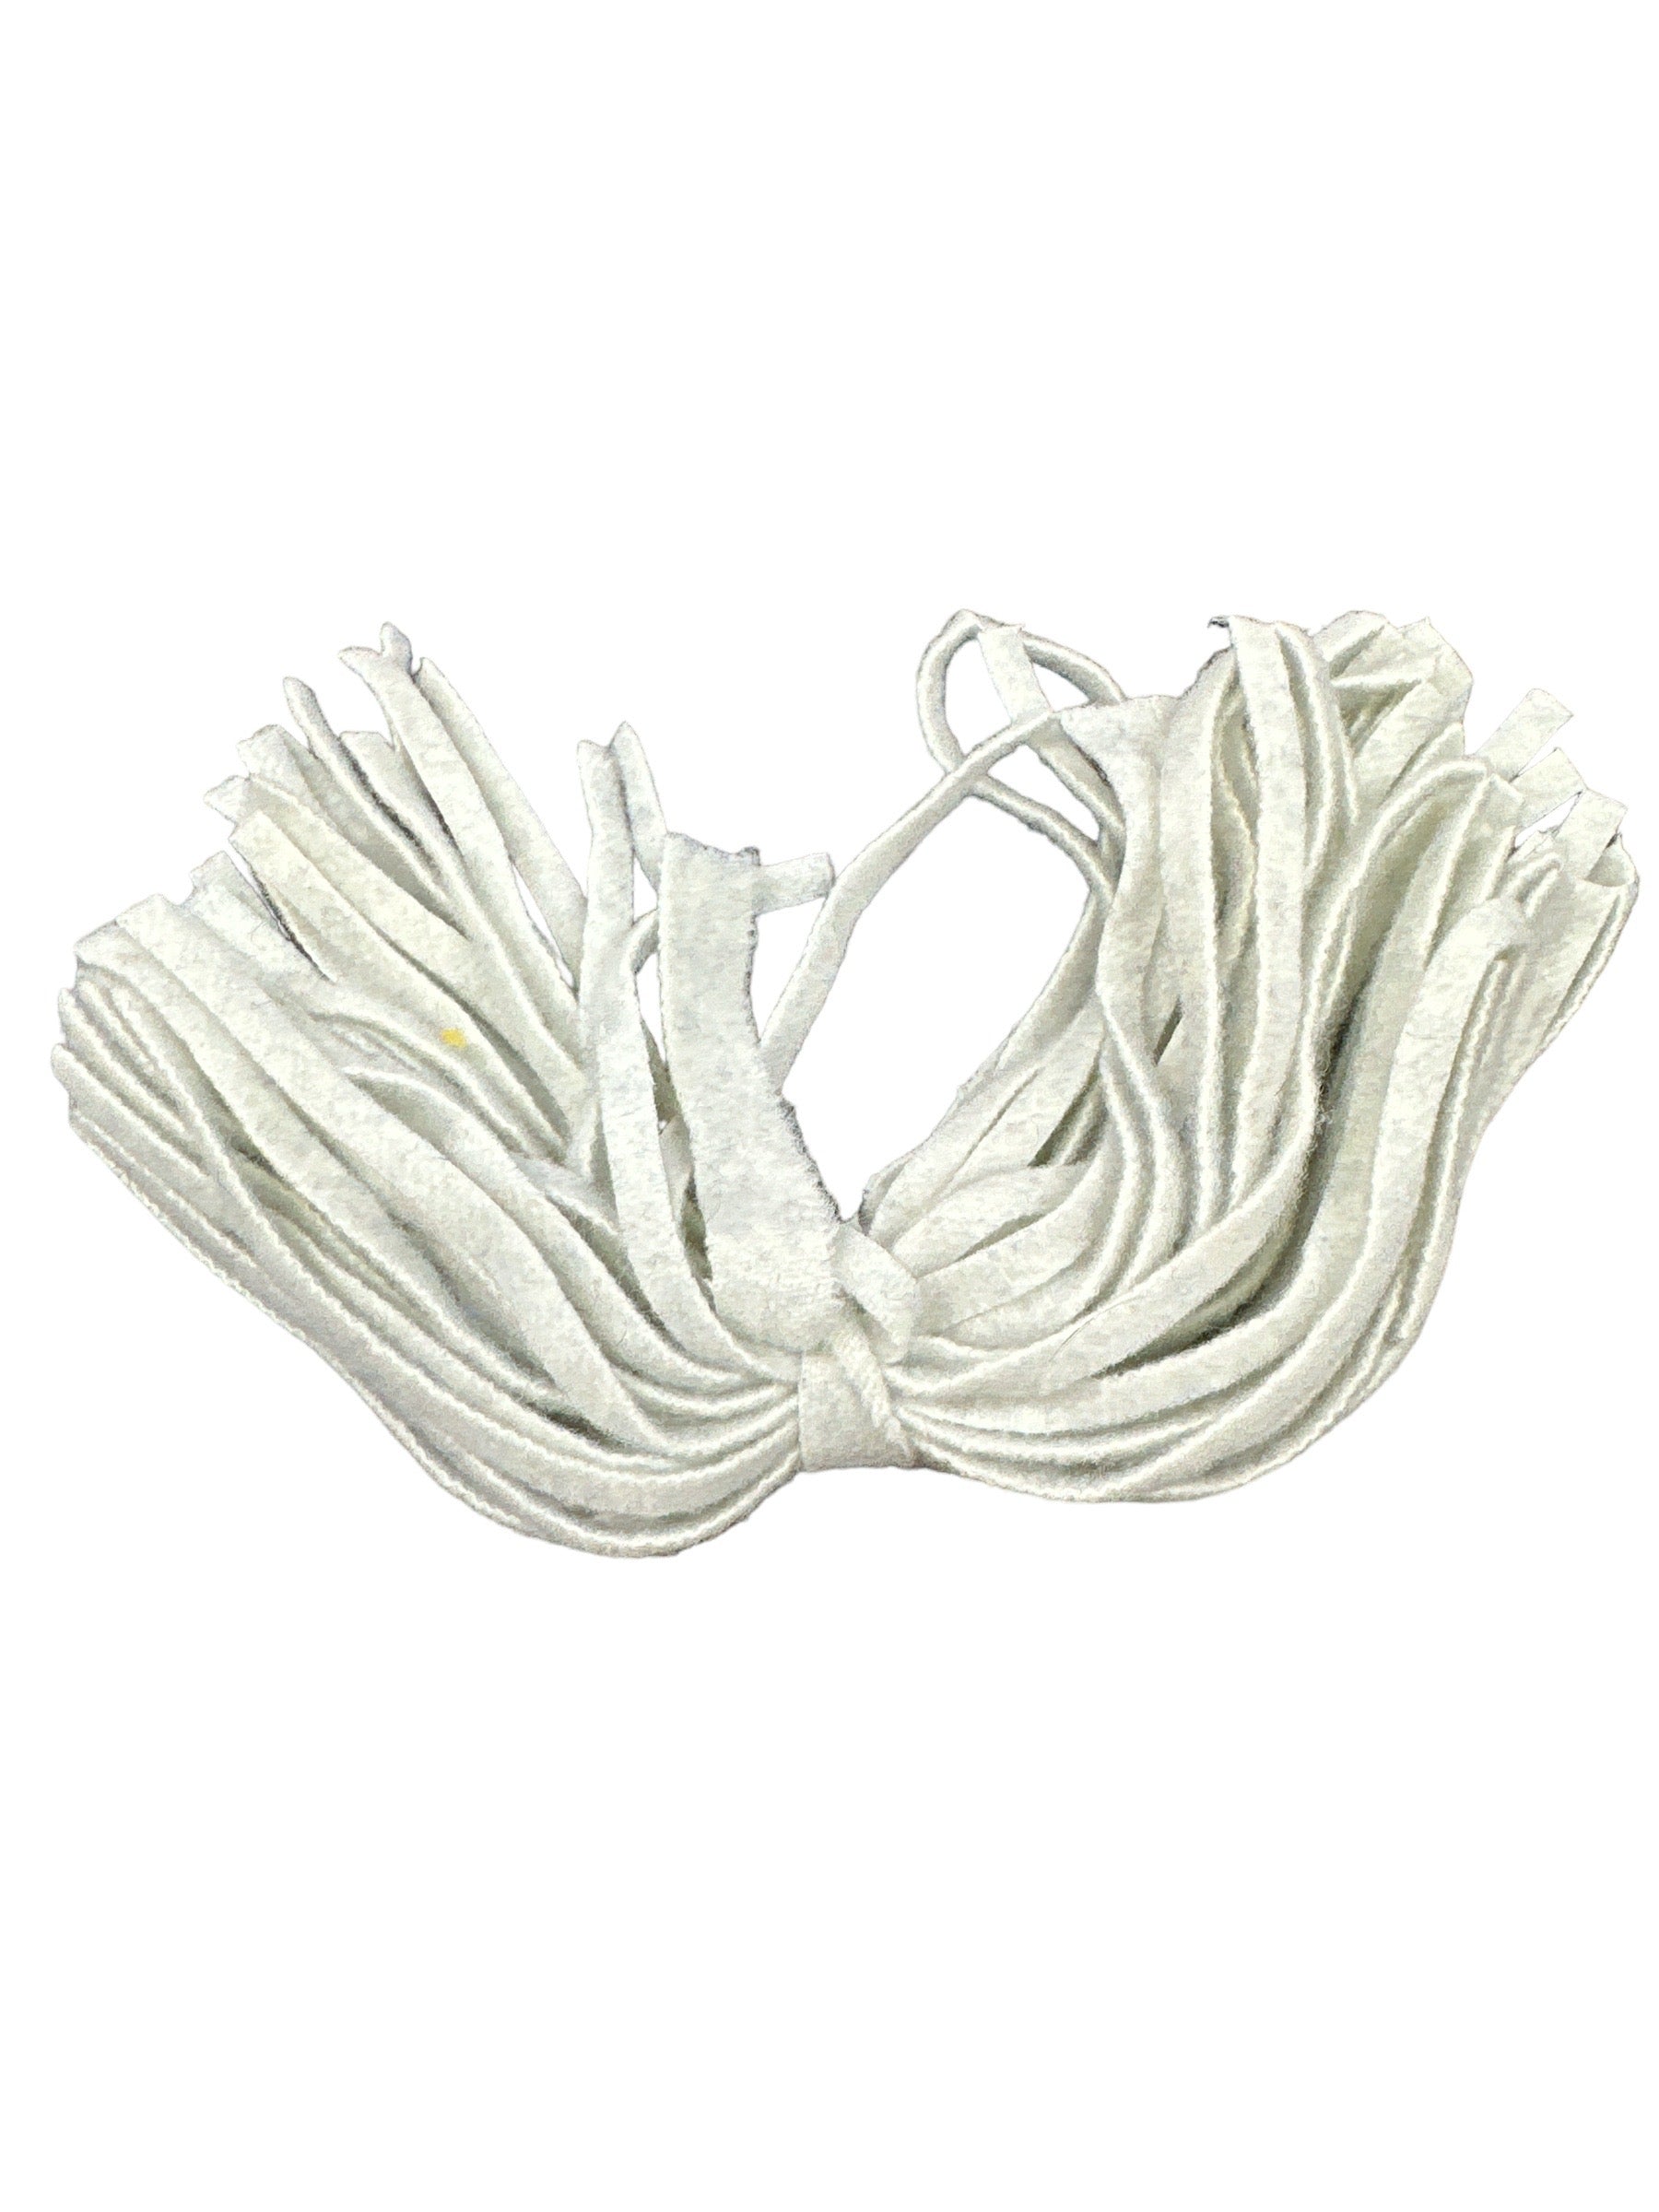 50 Count - Dorr #8 Wool Strips for Rug Hooking